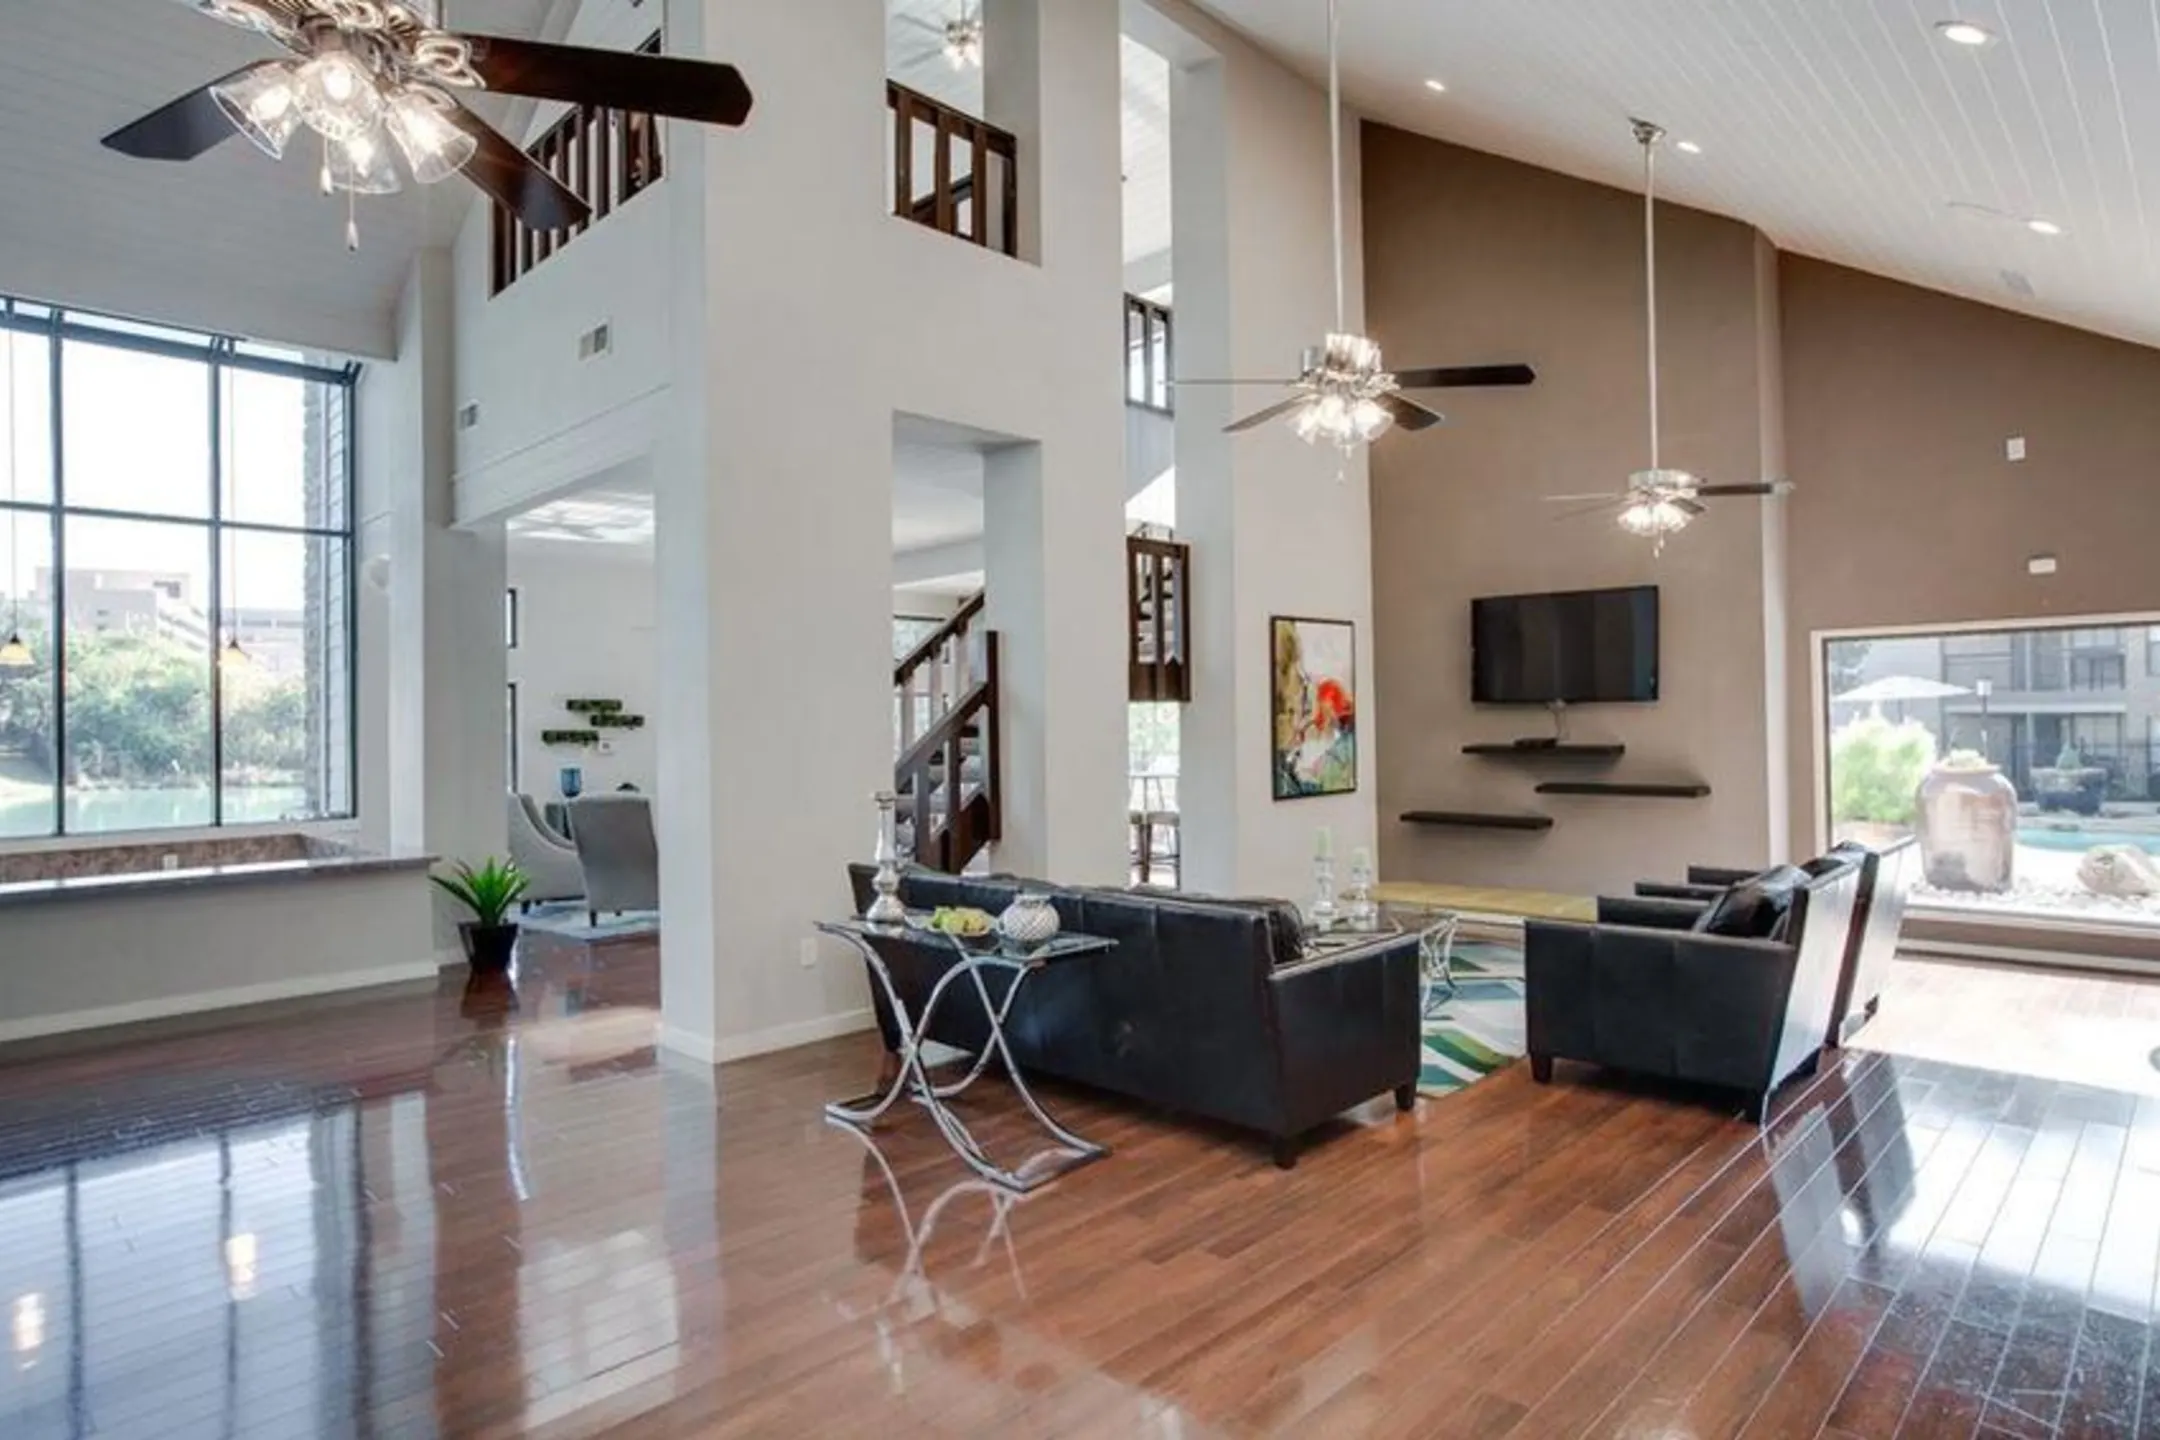 Living Room - Courtyard Condos - Dallas, TX